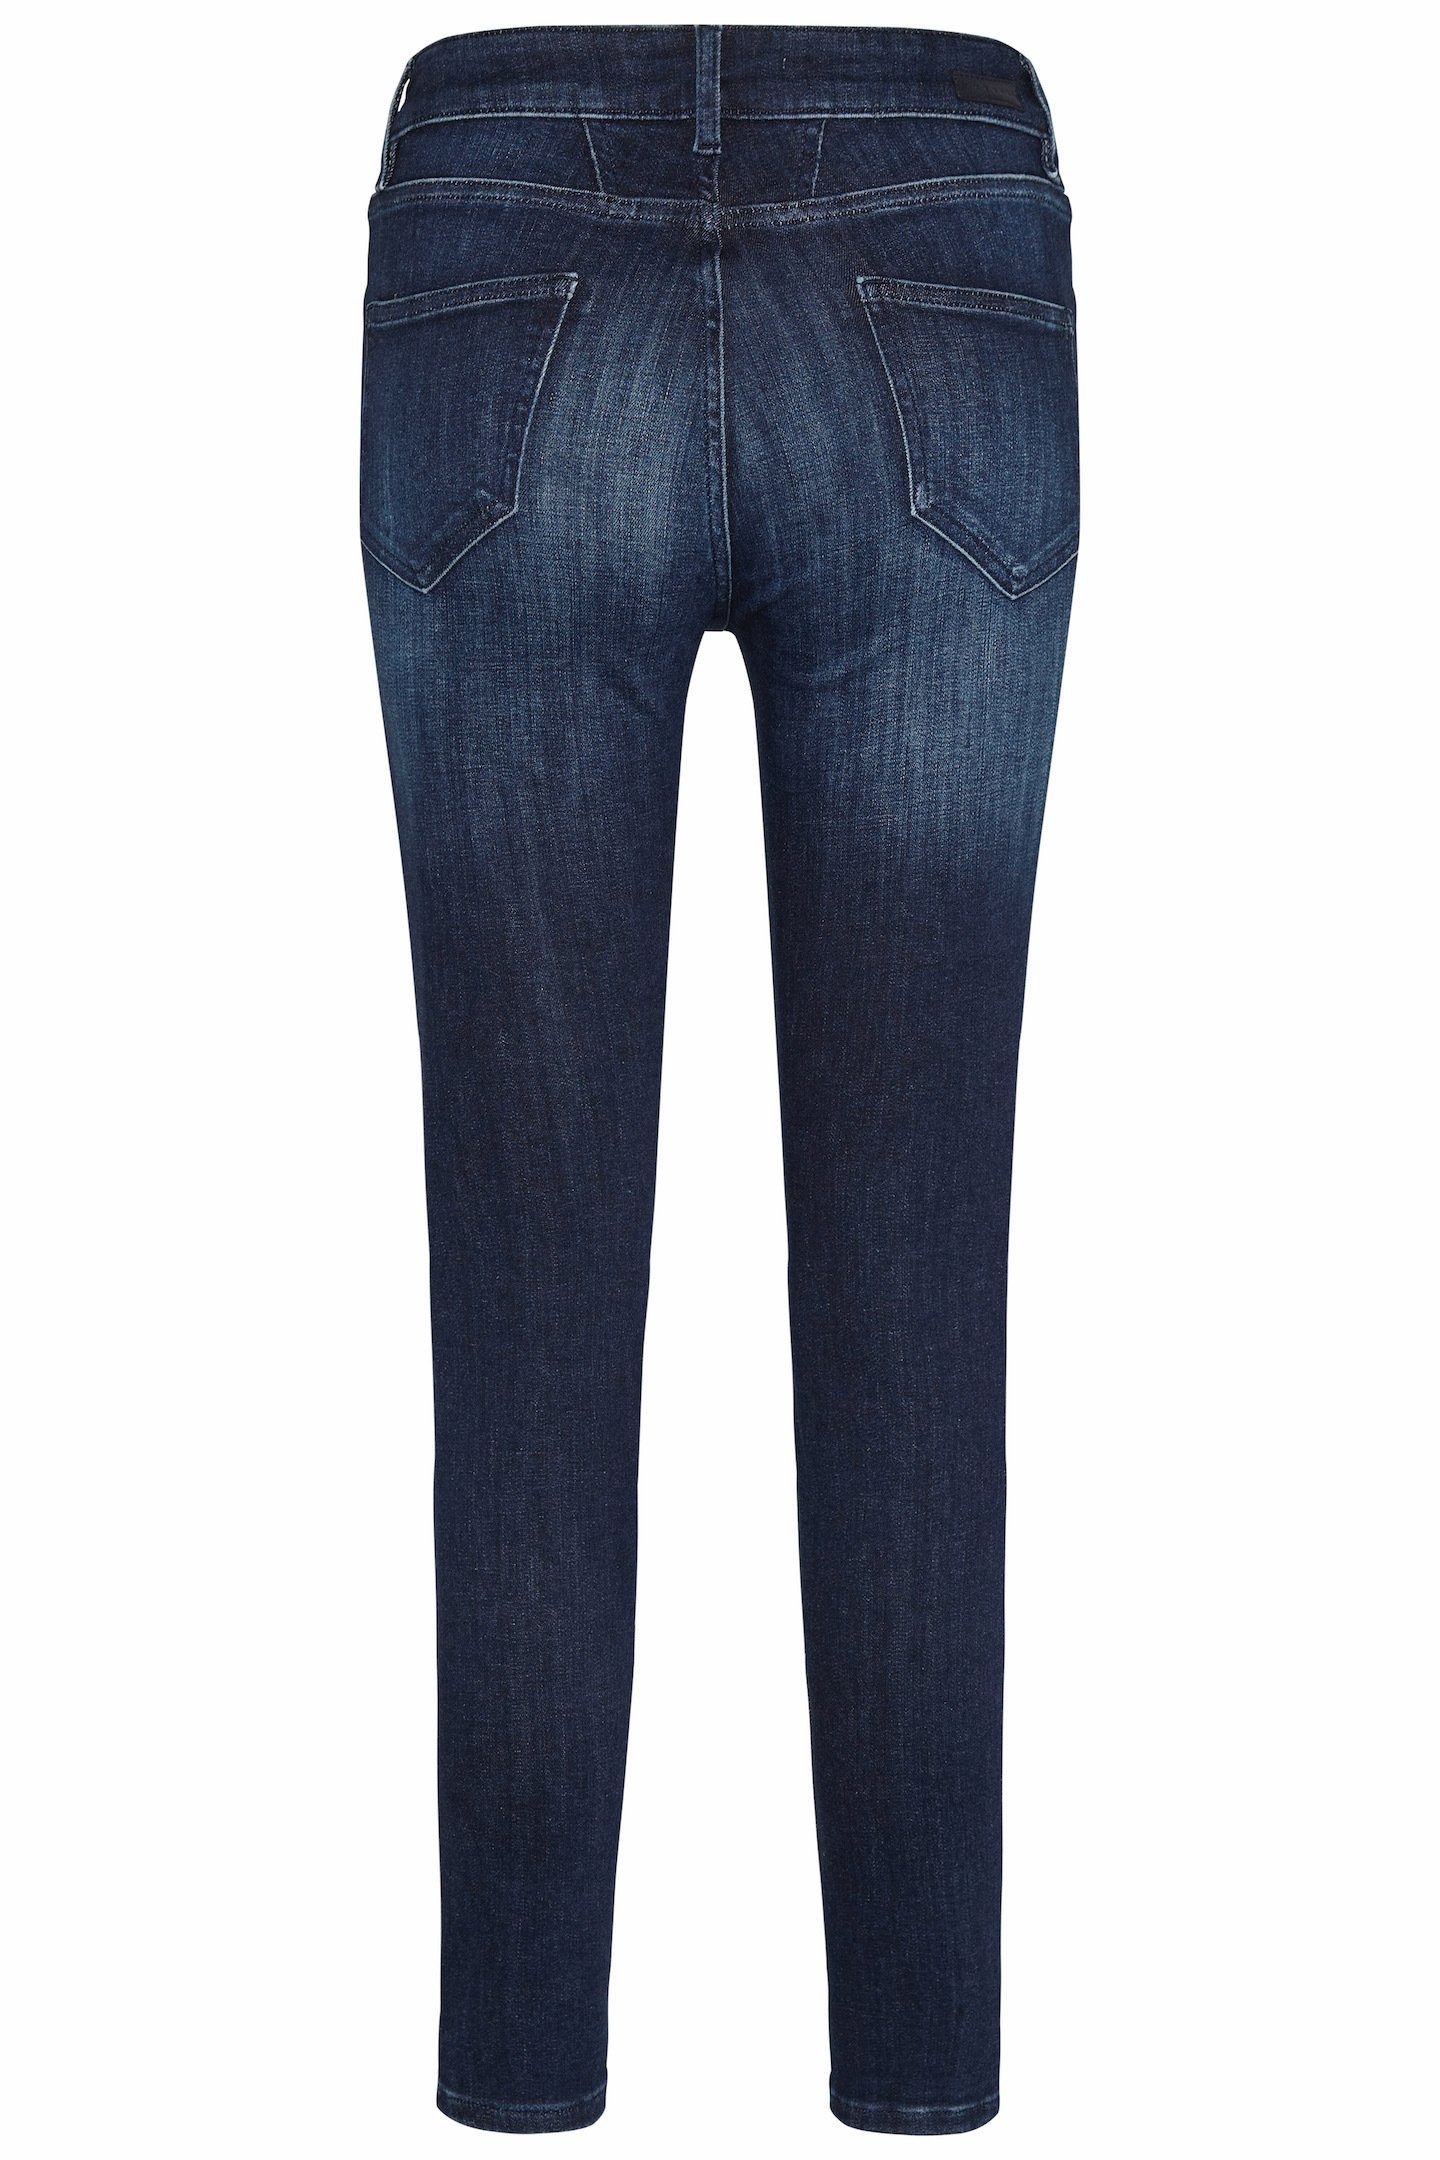 bugatti 5-Pocket-Jeans leichte Used-Waschung dunkelblau